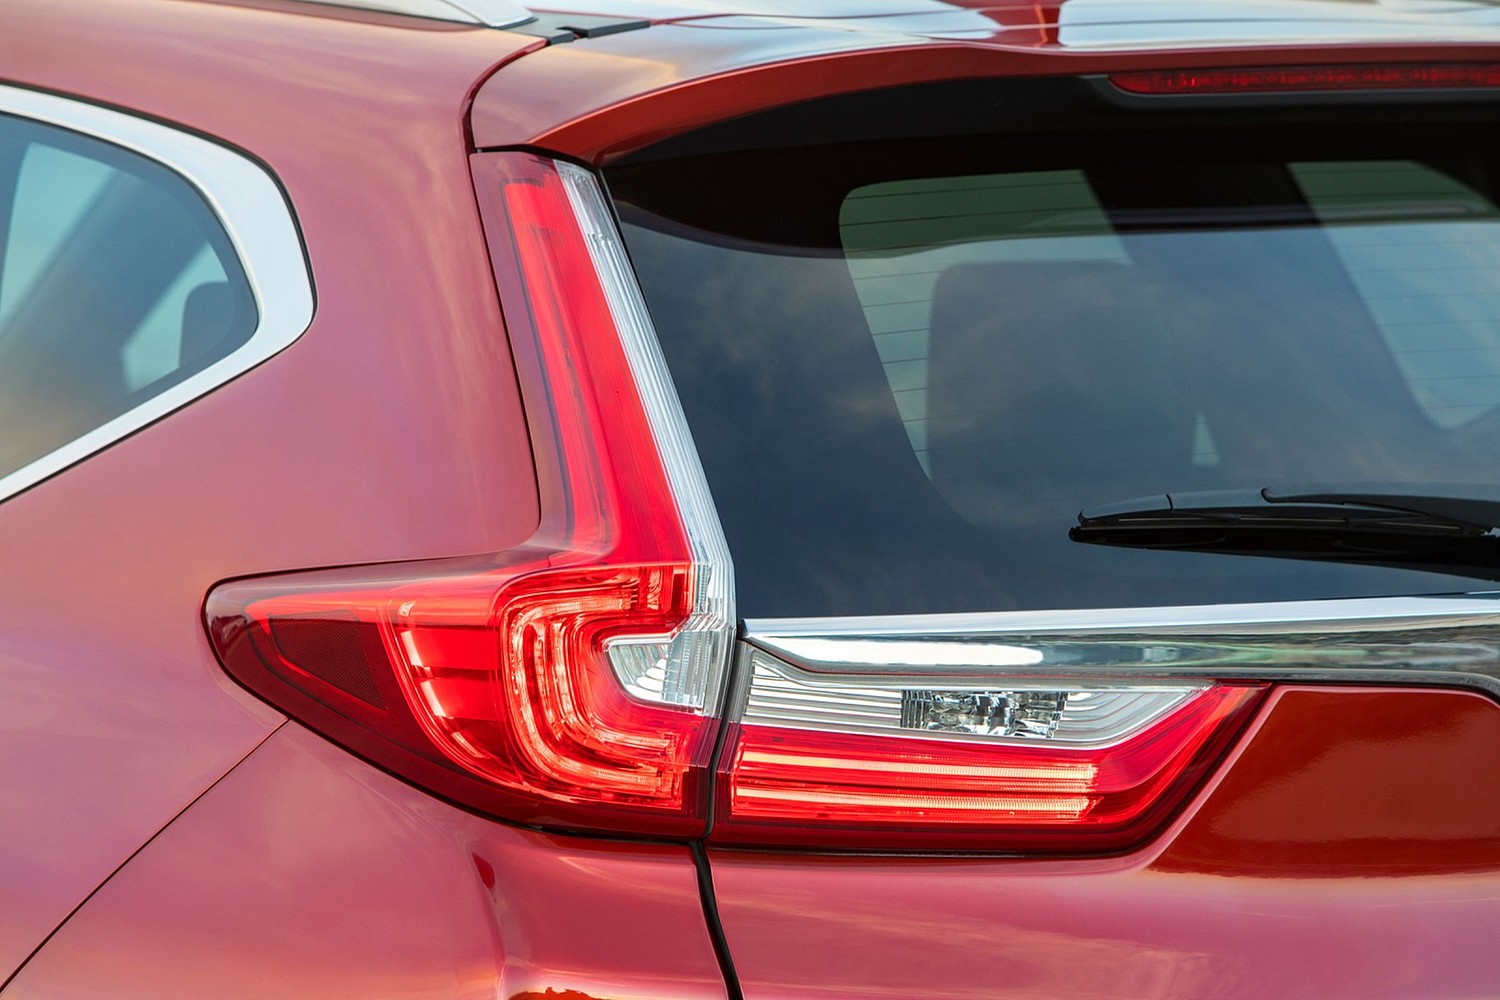 Honda CR-V Touring 4dr SUV Exterior Detail (2017 model year shown)